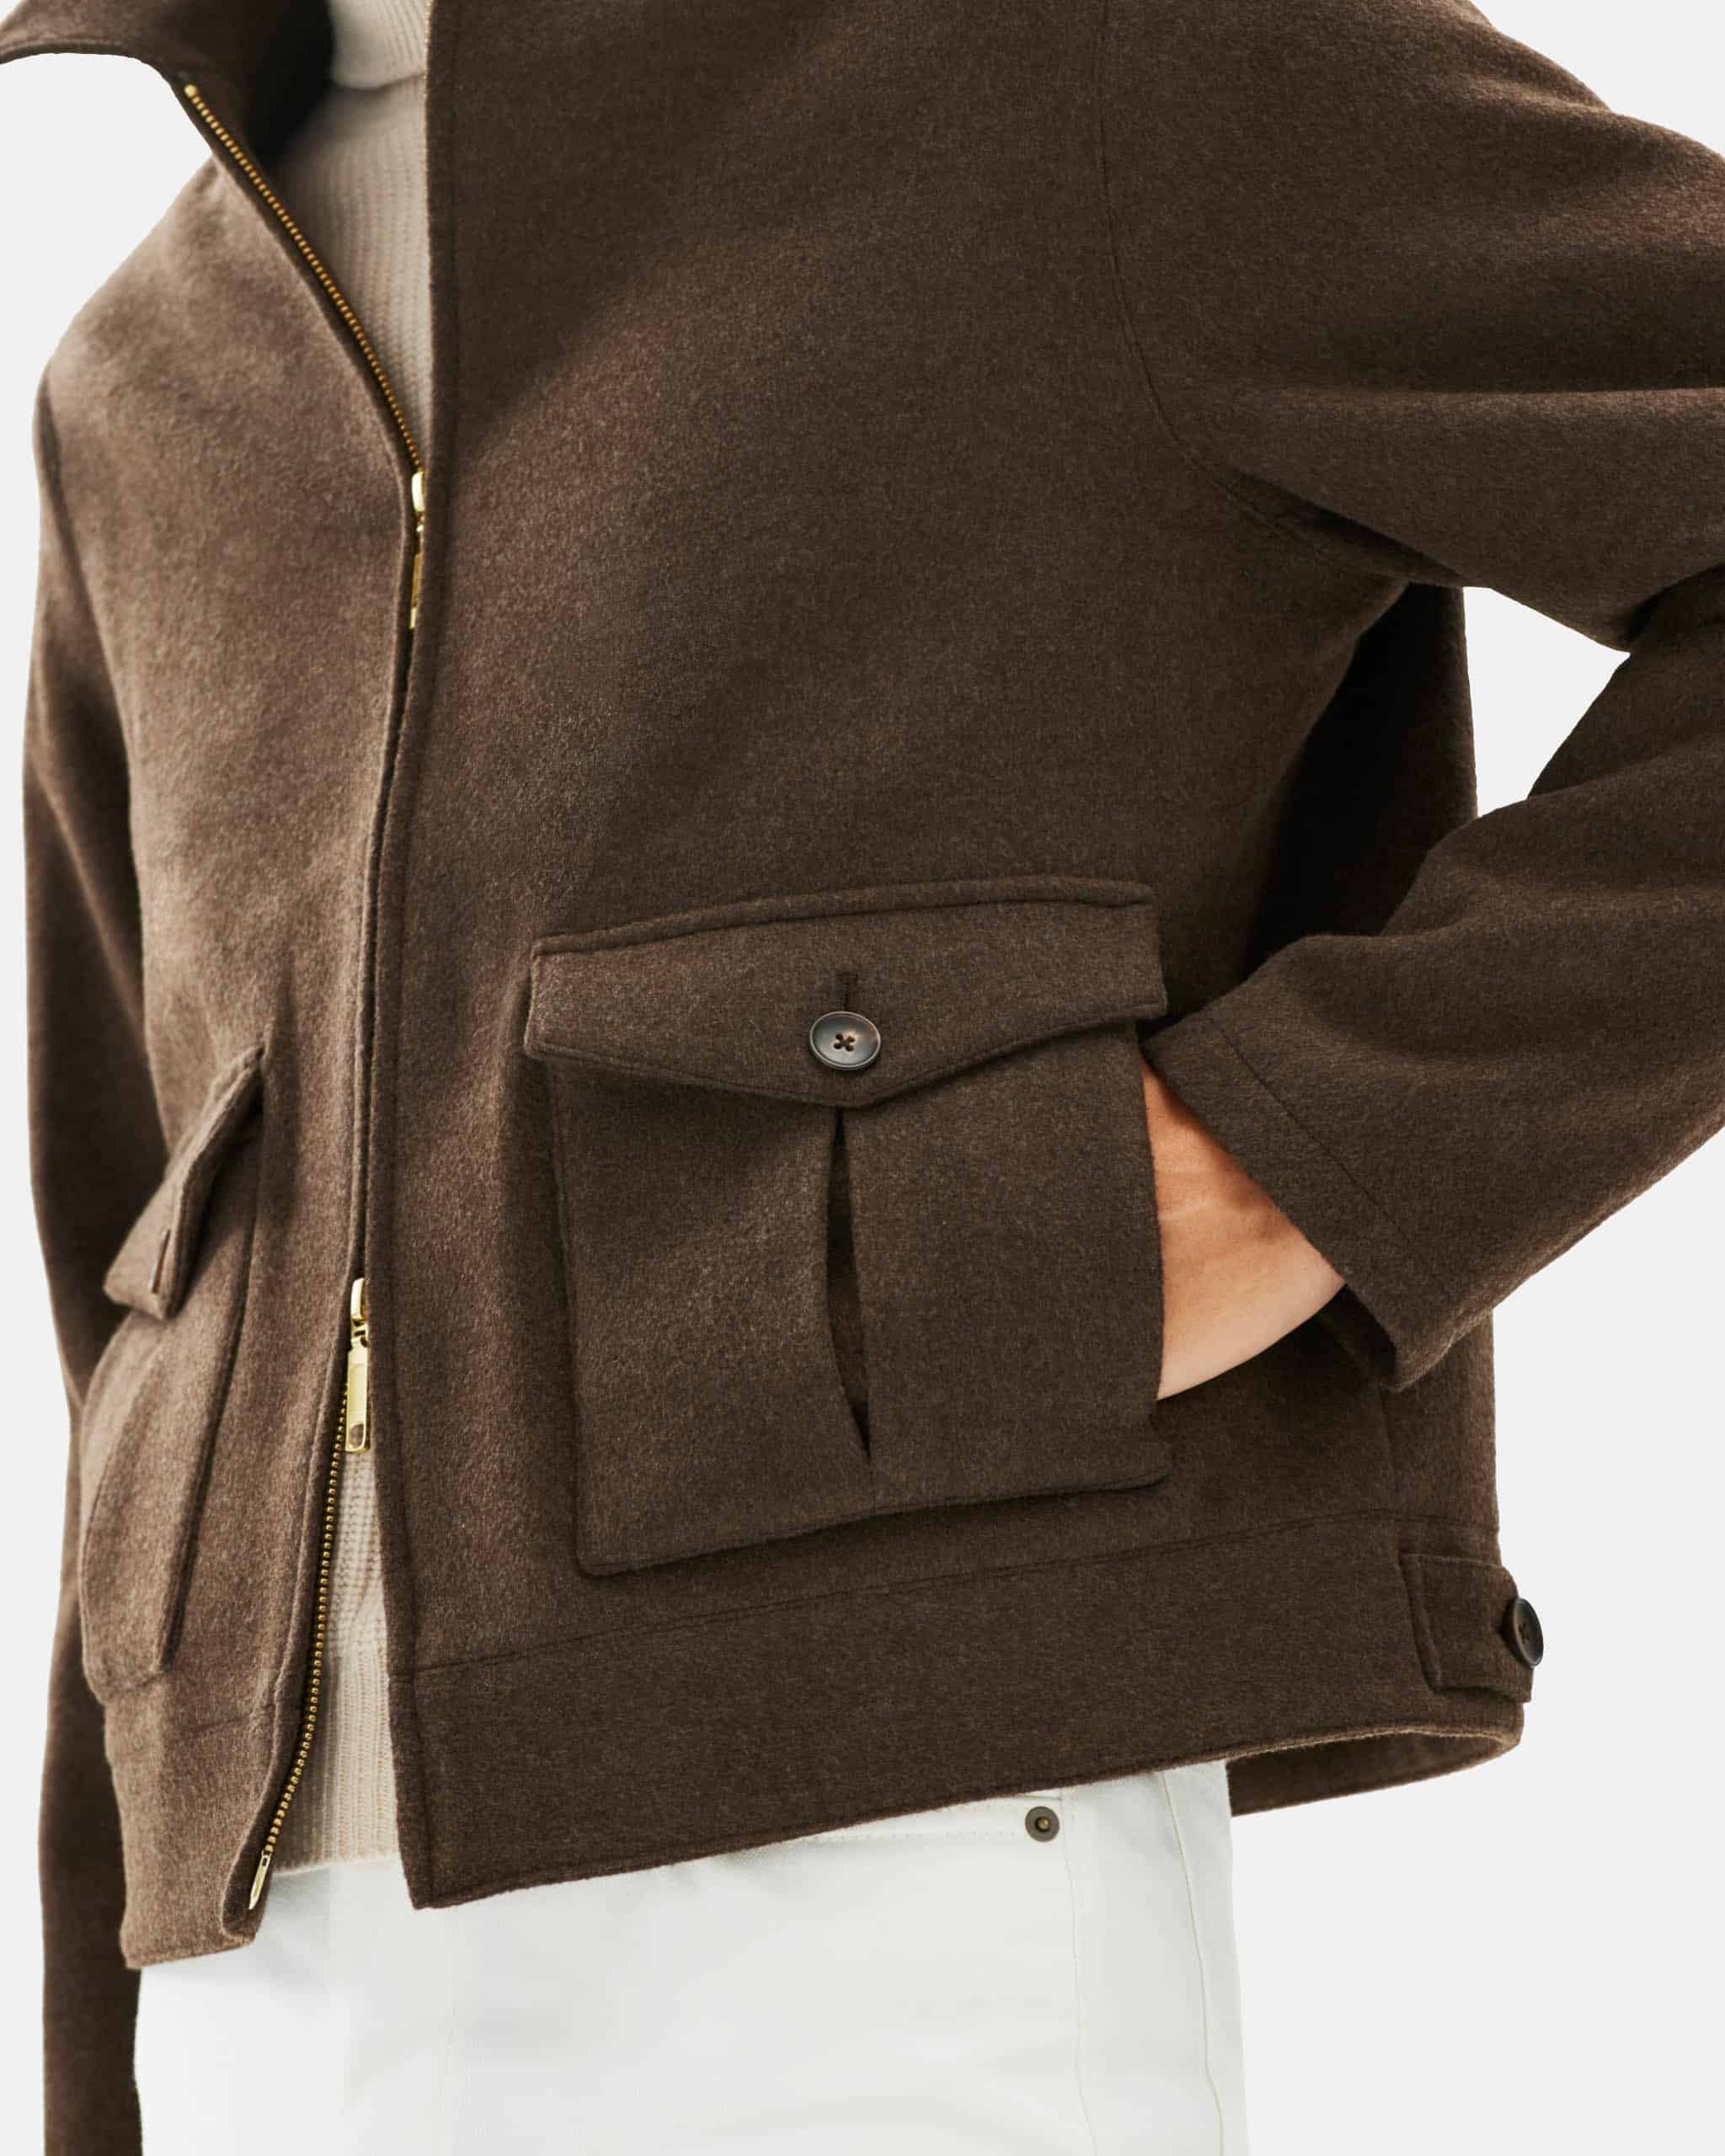 Explorateur DLV jacket pecora nera brown image 4